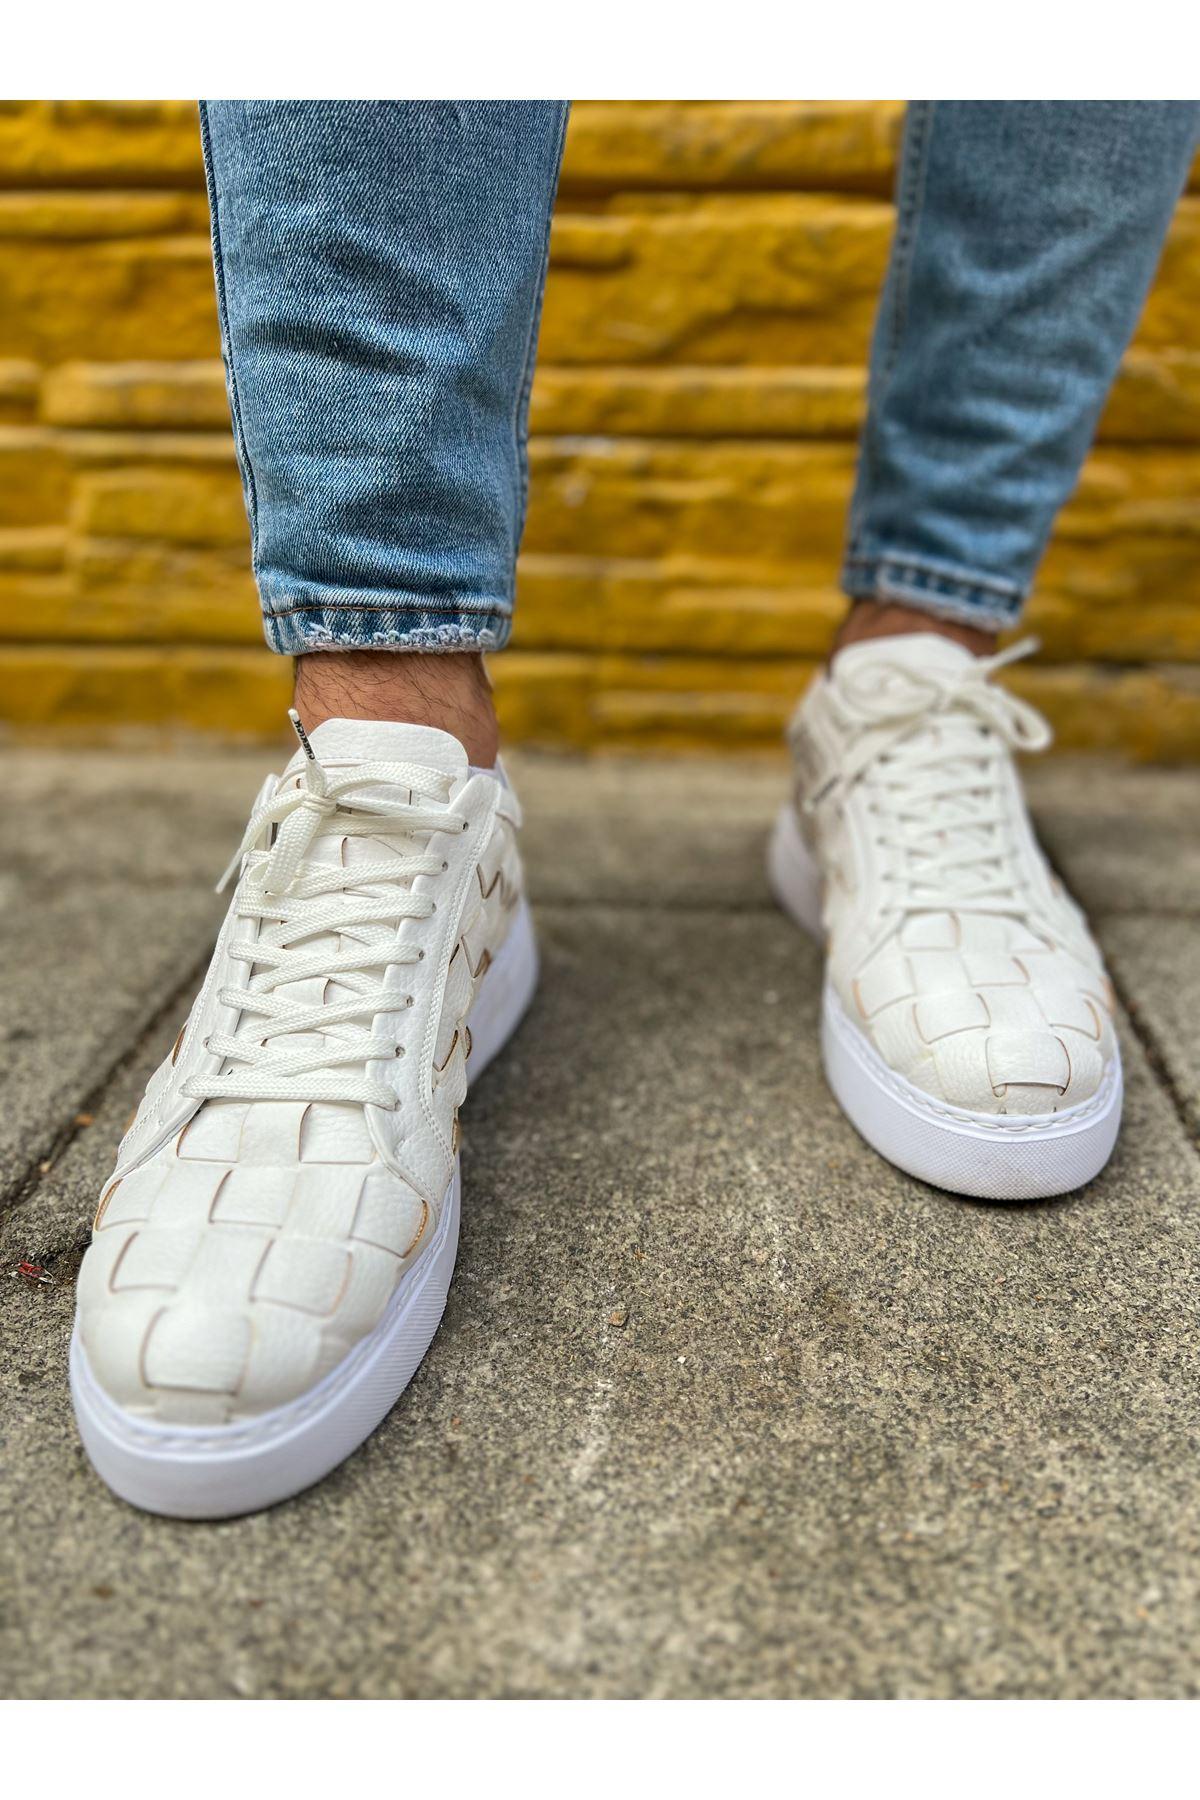 CH209 OBT Vimini Men's Shoes sneakers WHITE - STREET MODE ™